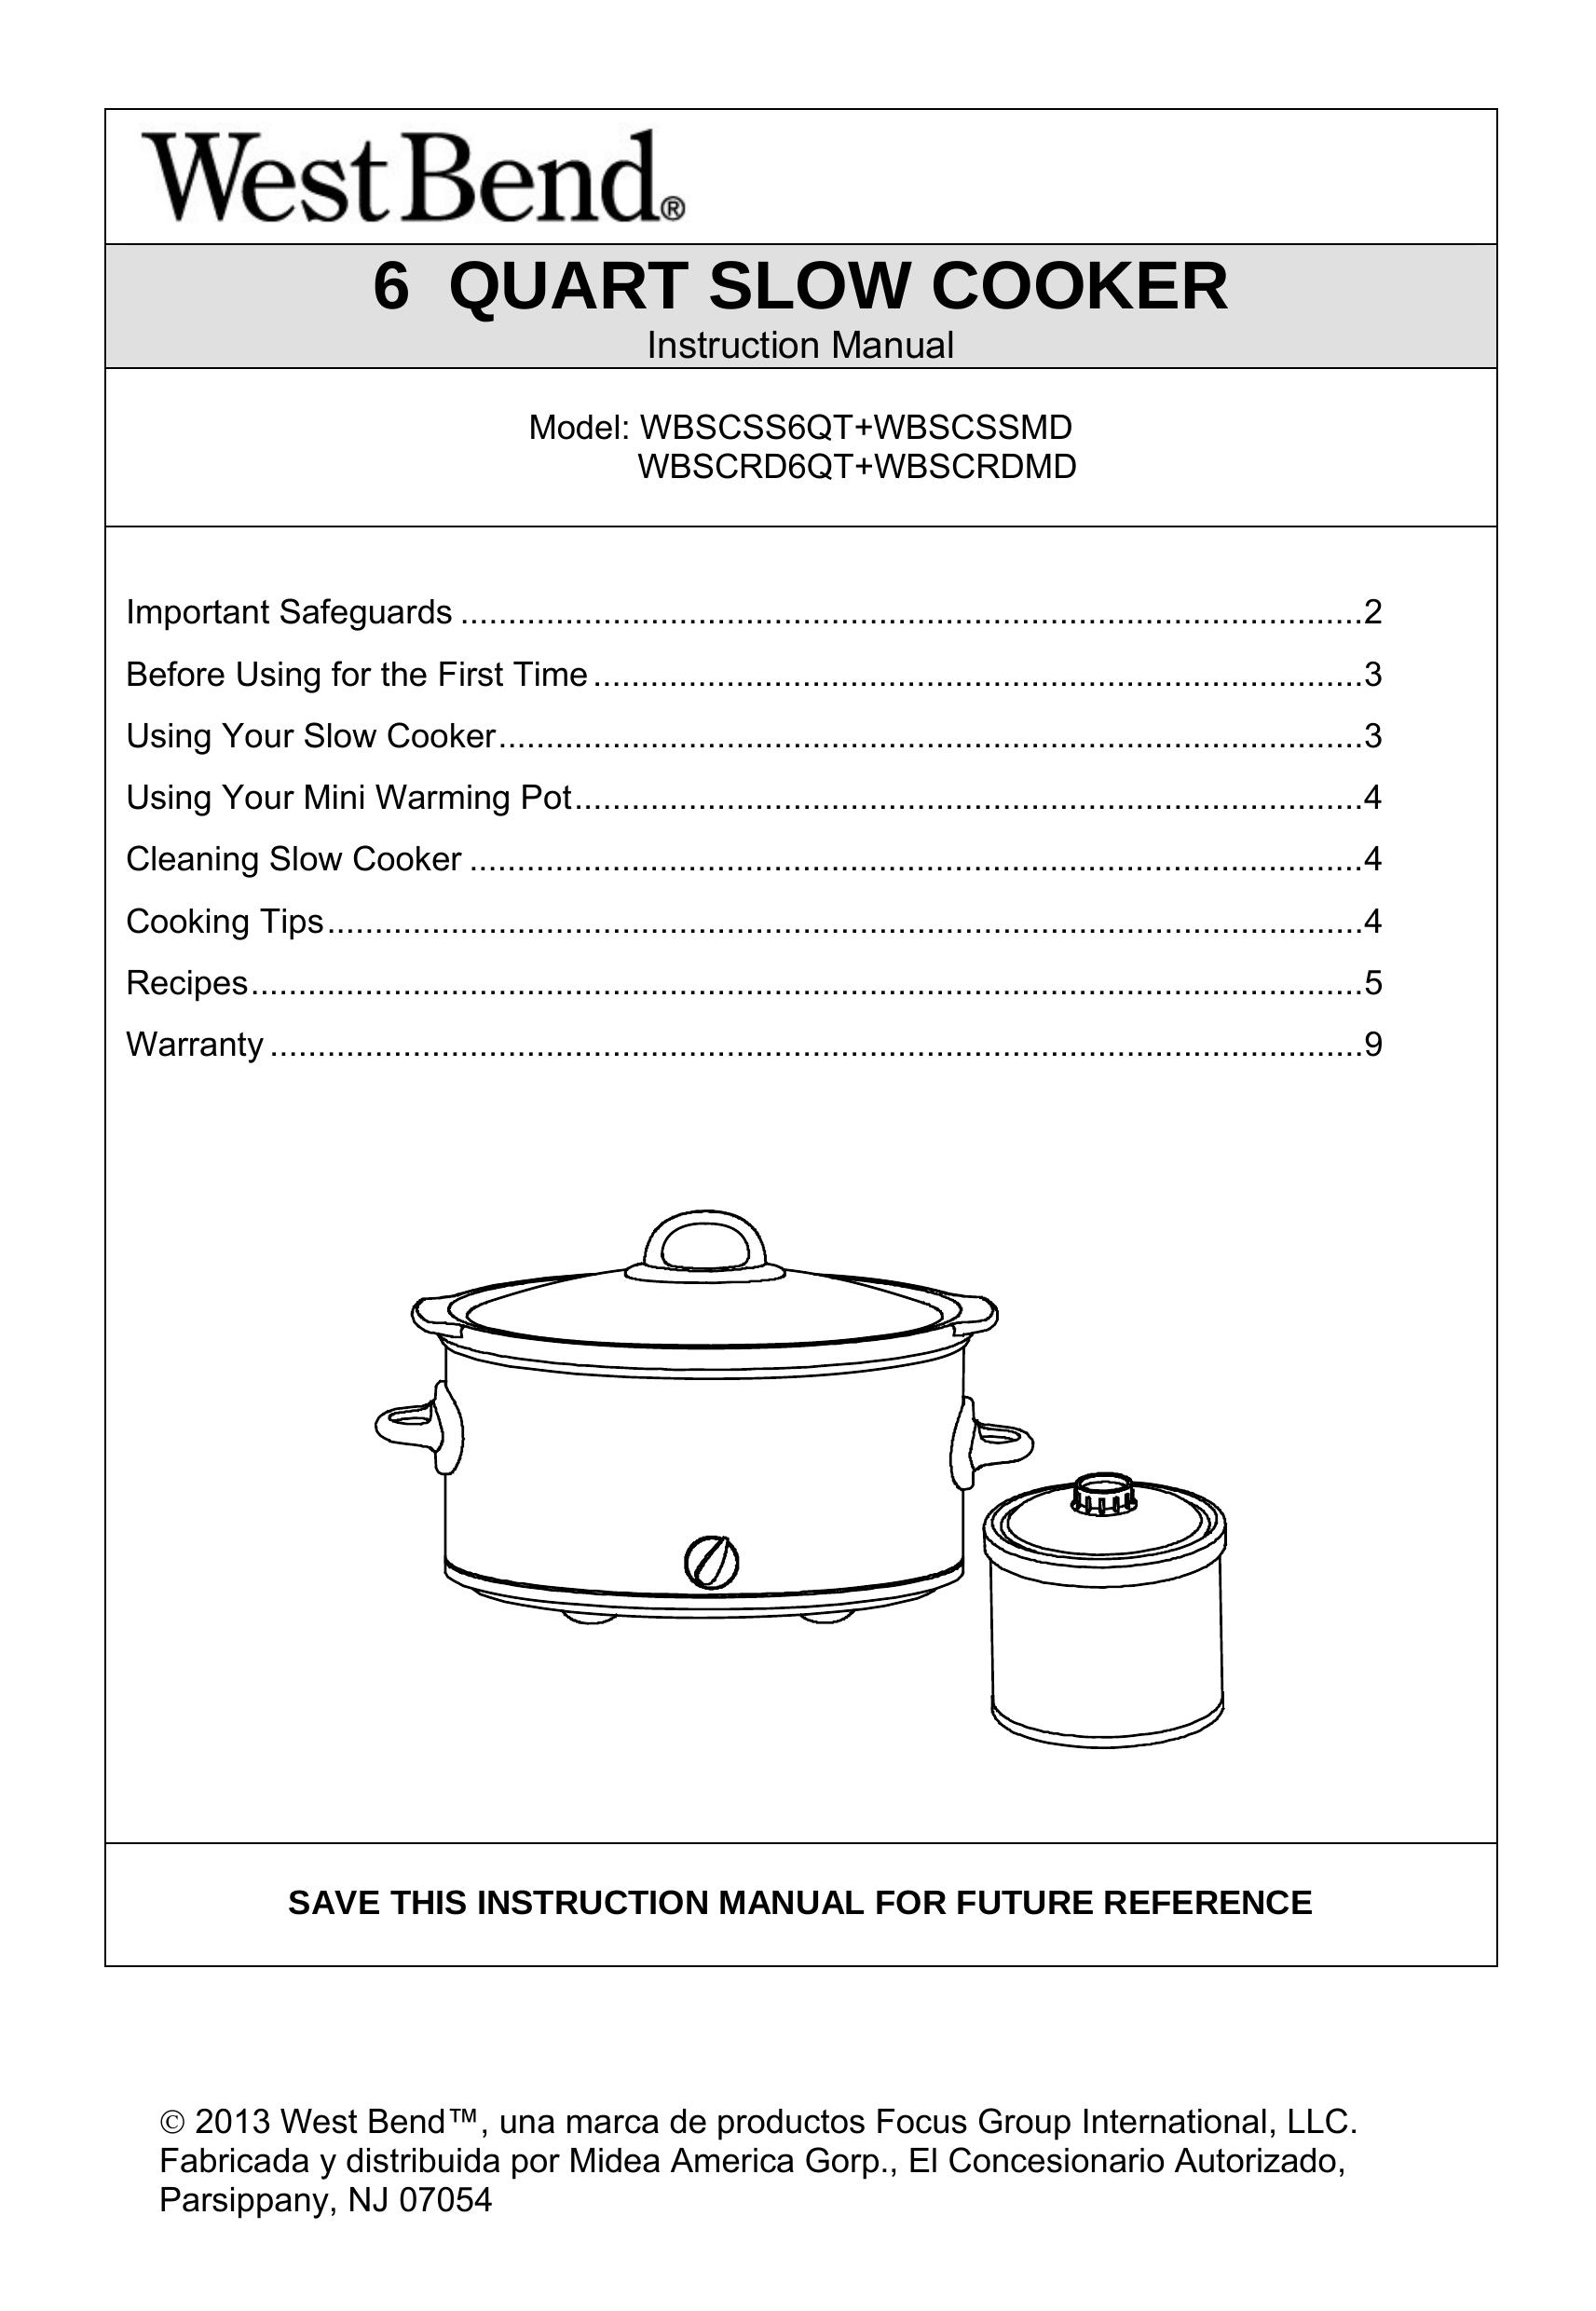 West Bend WBSCSSMD Slow Cooker User Manual